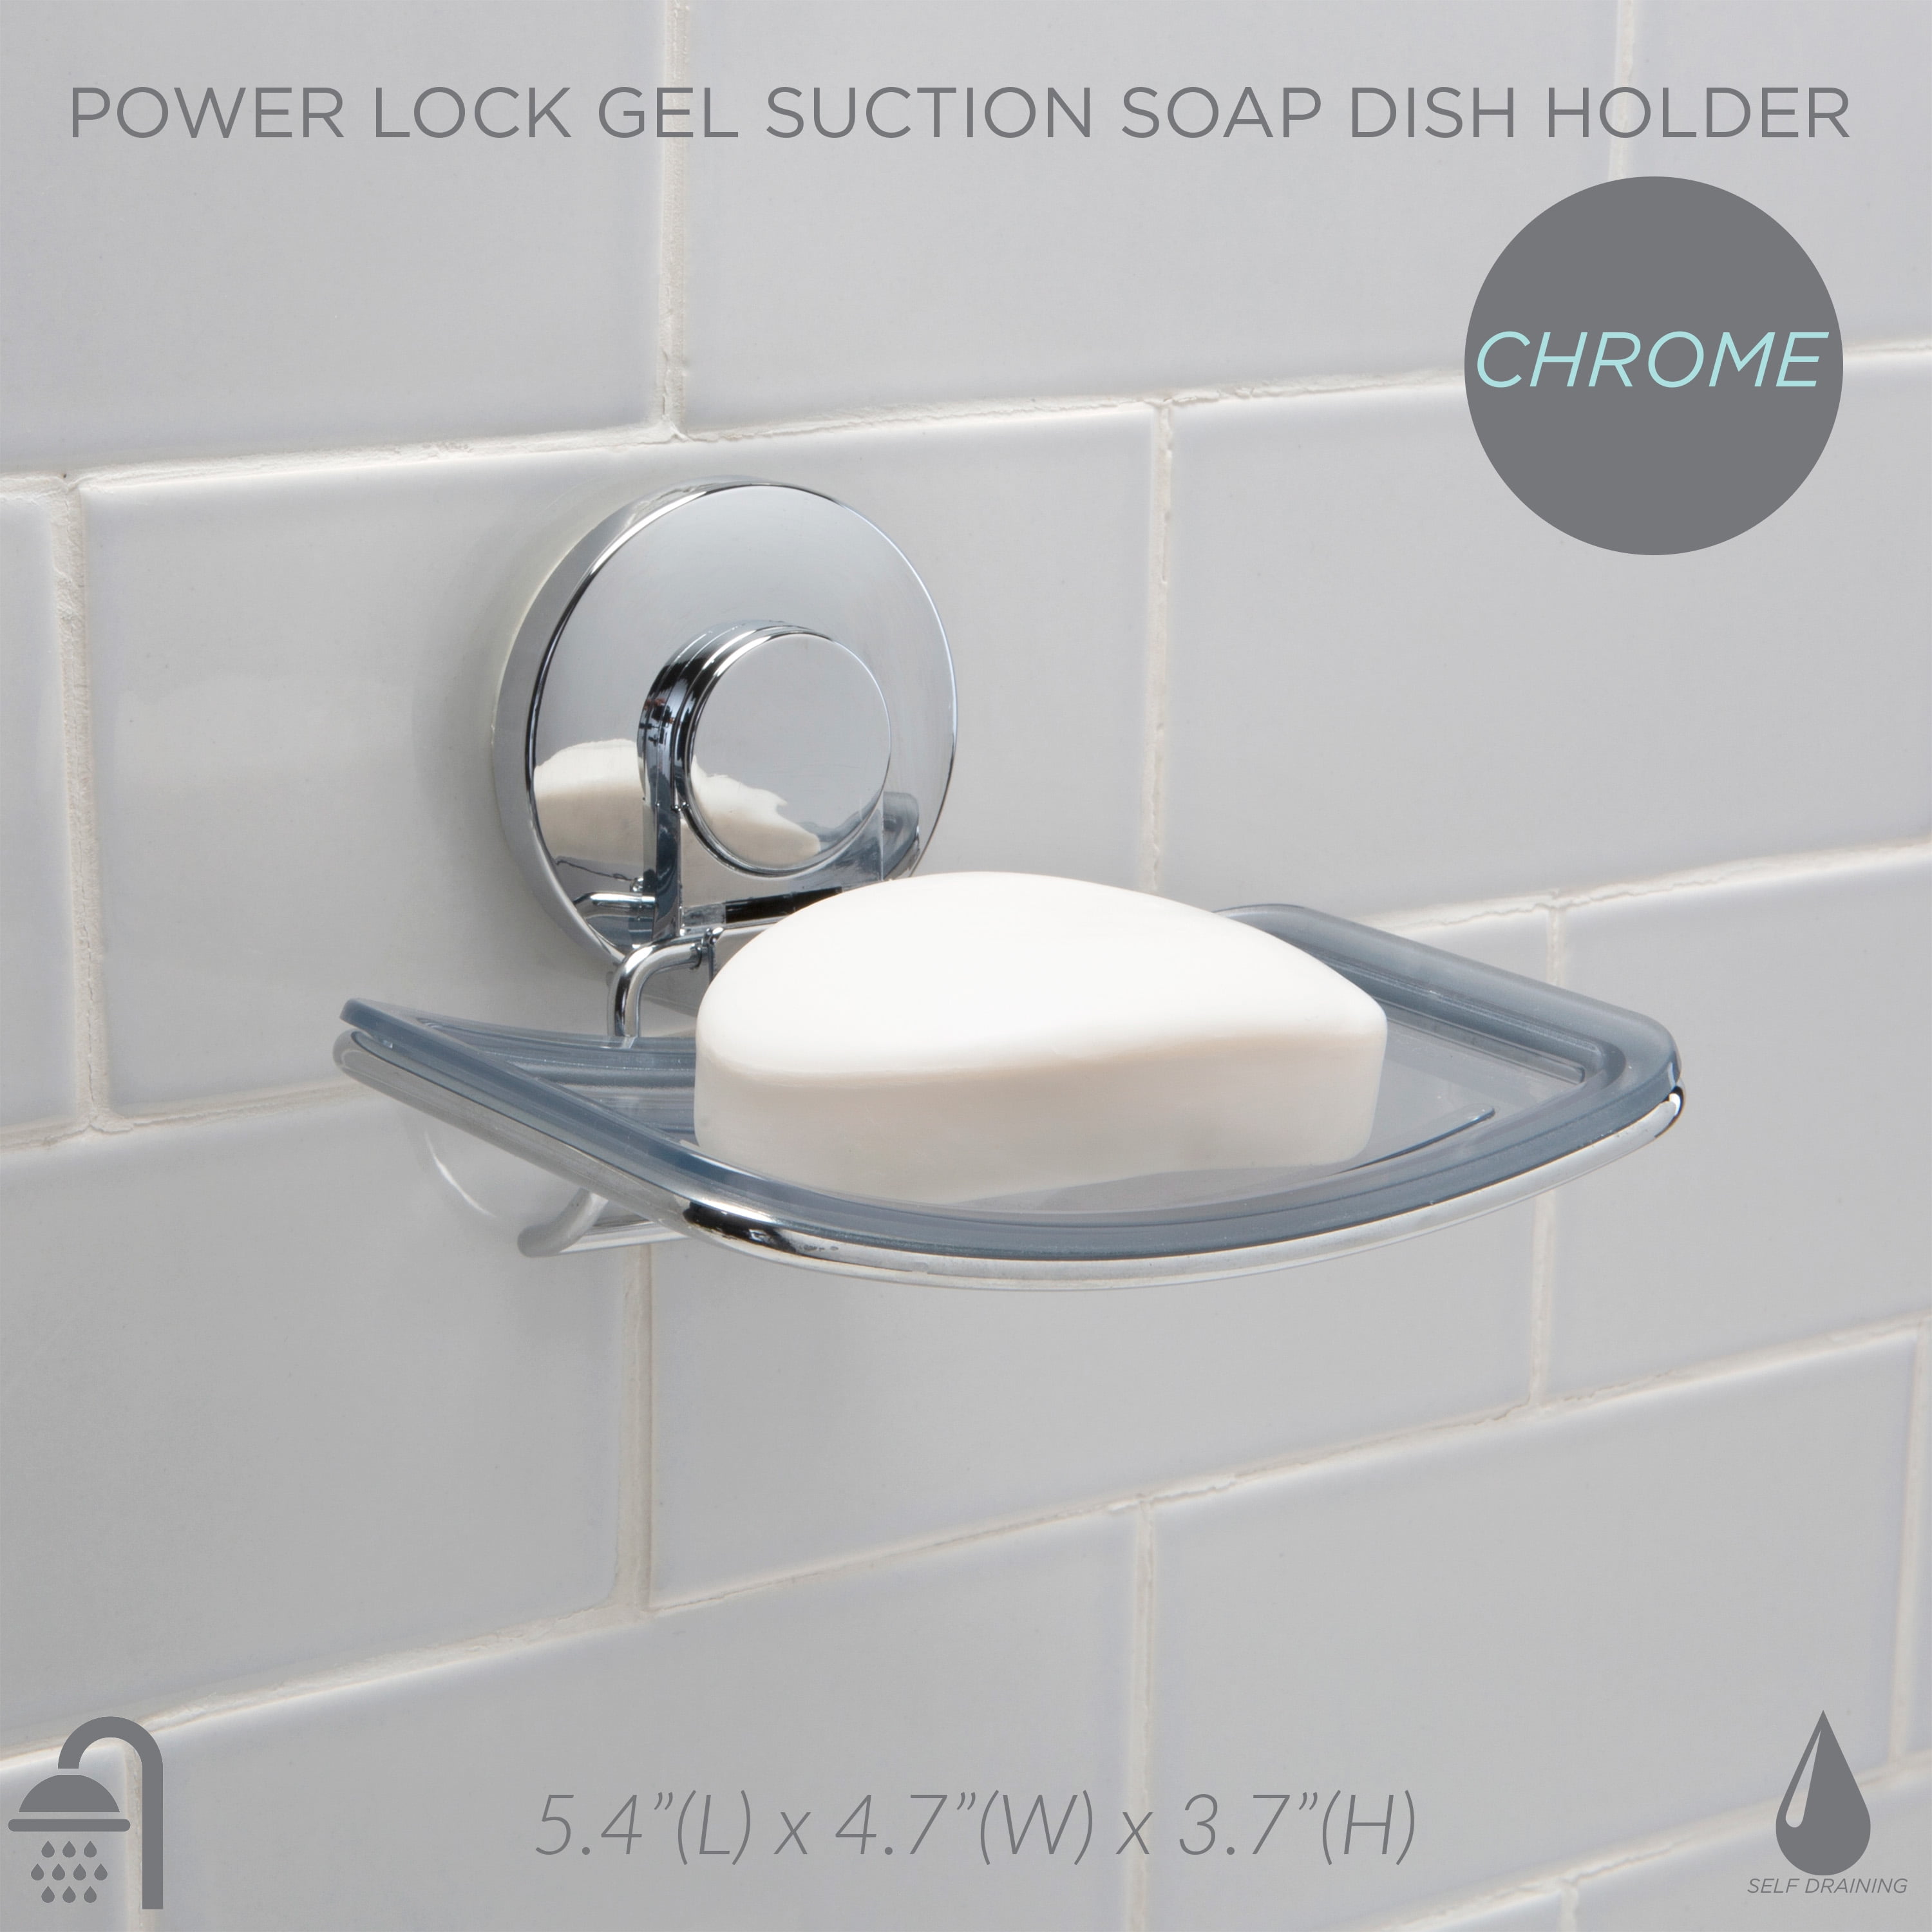 Hot Sales Bathroom Self-Draining Chrome Plated Bar Soap Holder for